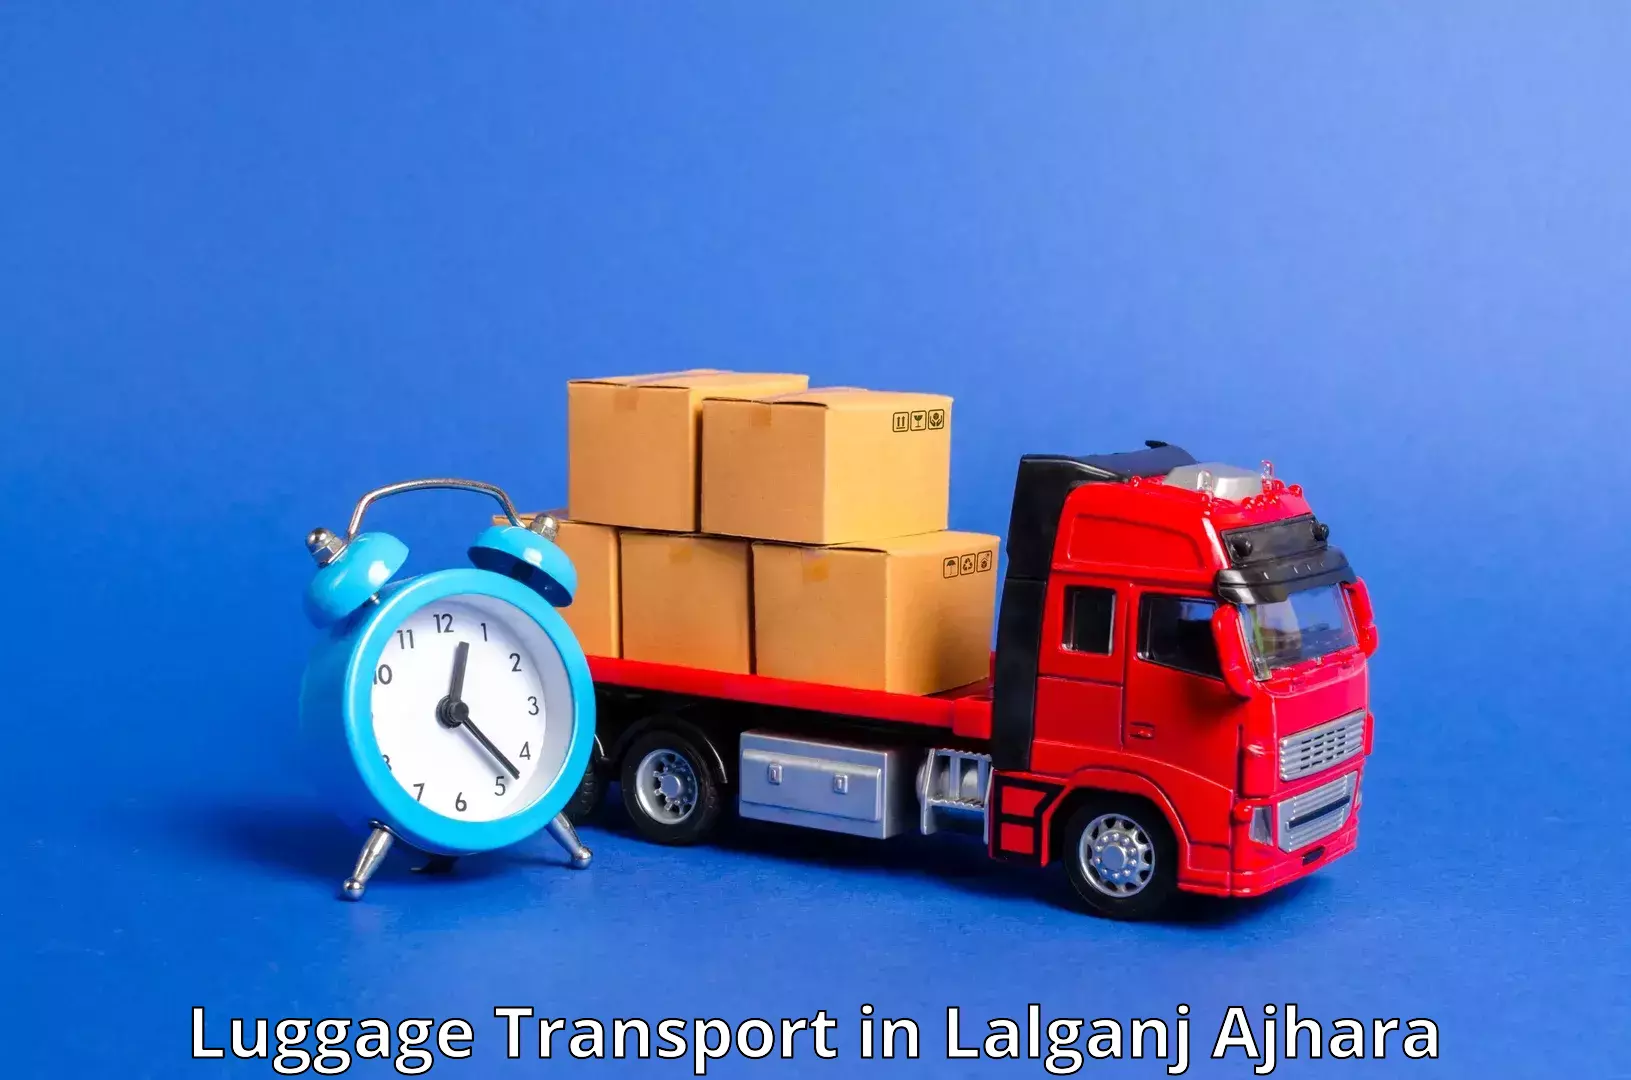 Premium luggage delivery in Lalganj Ajhara